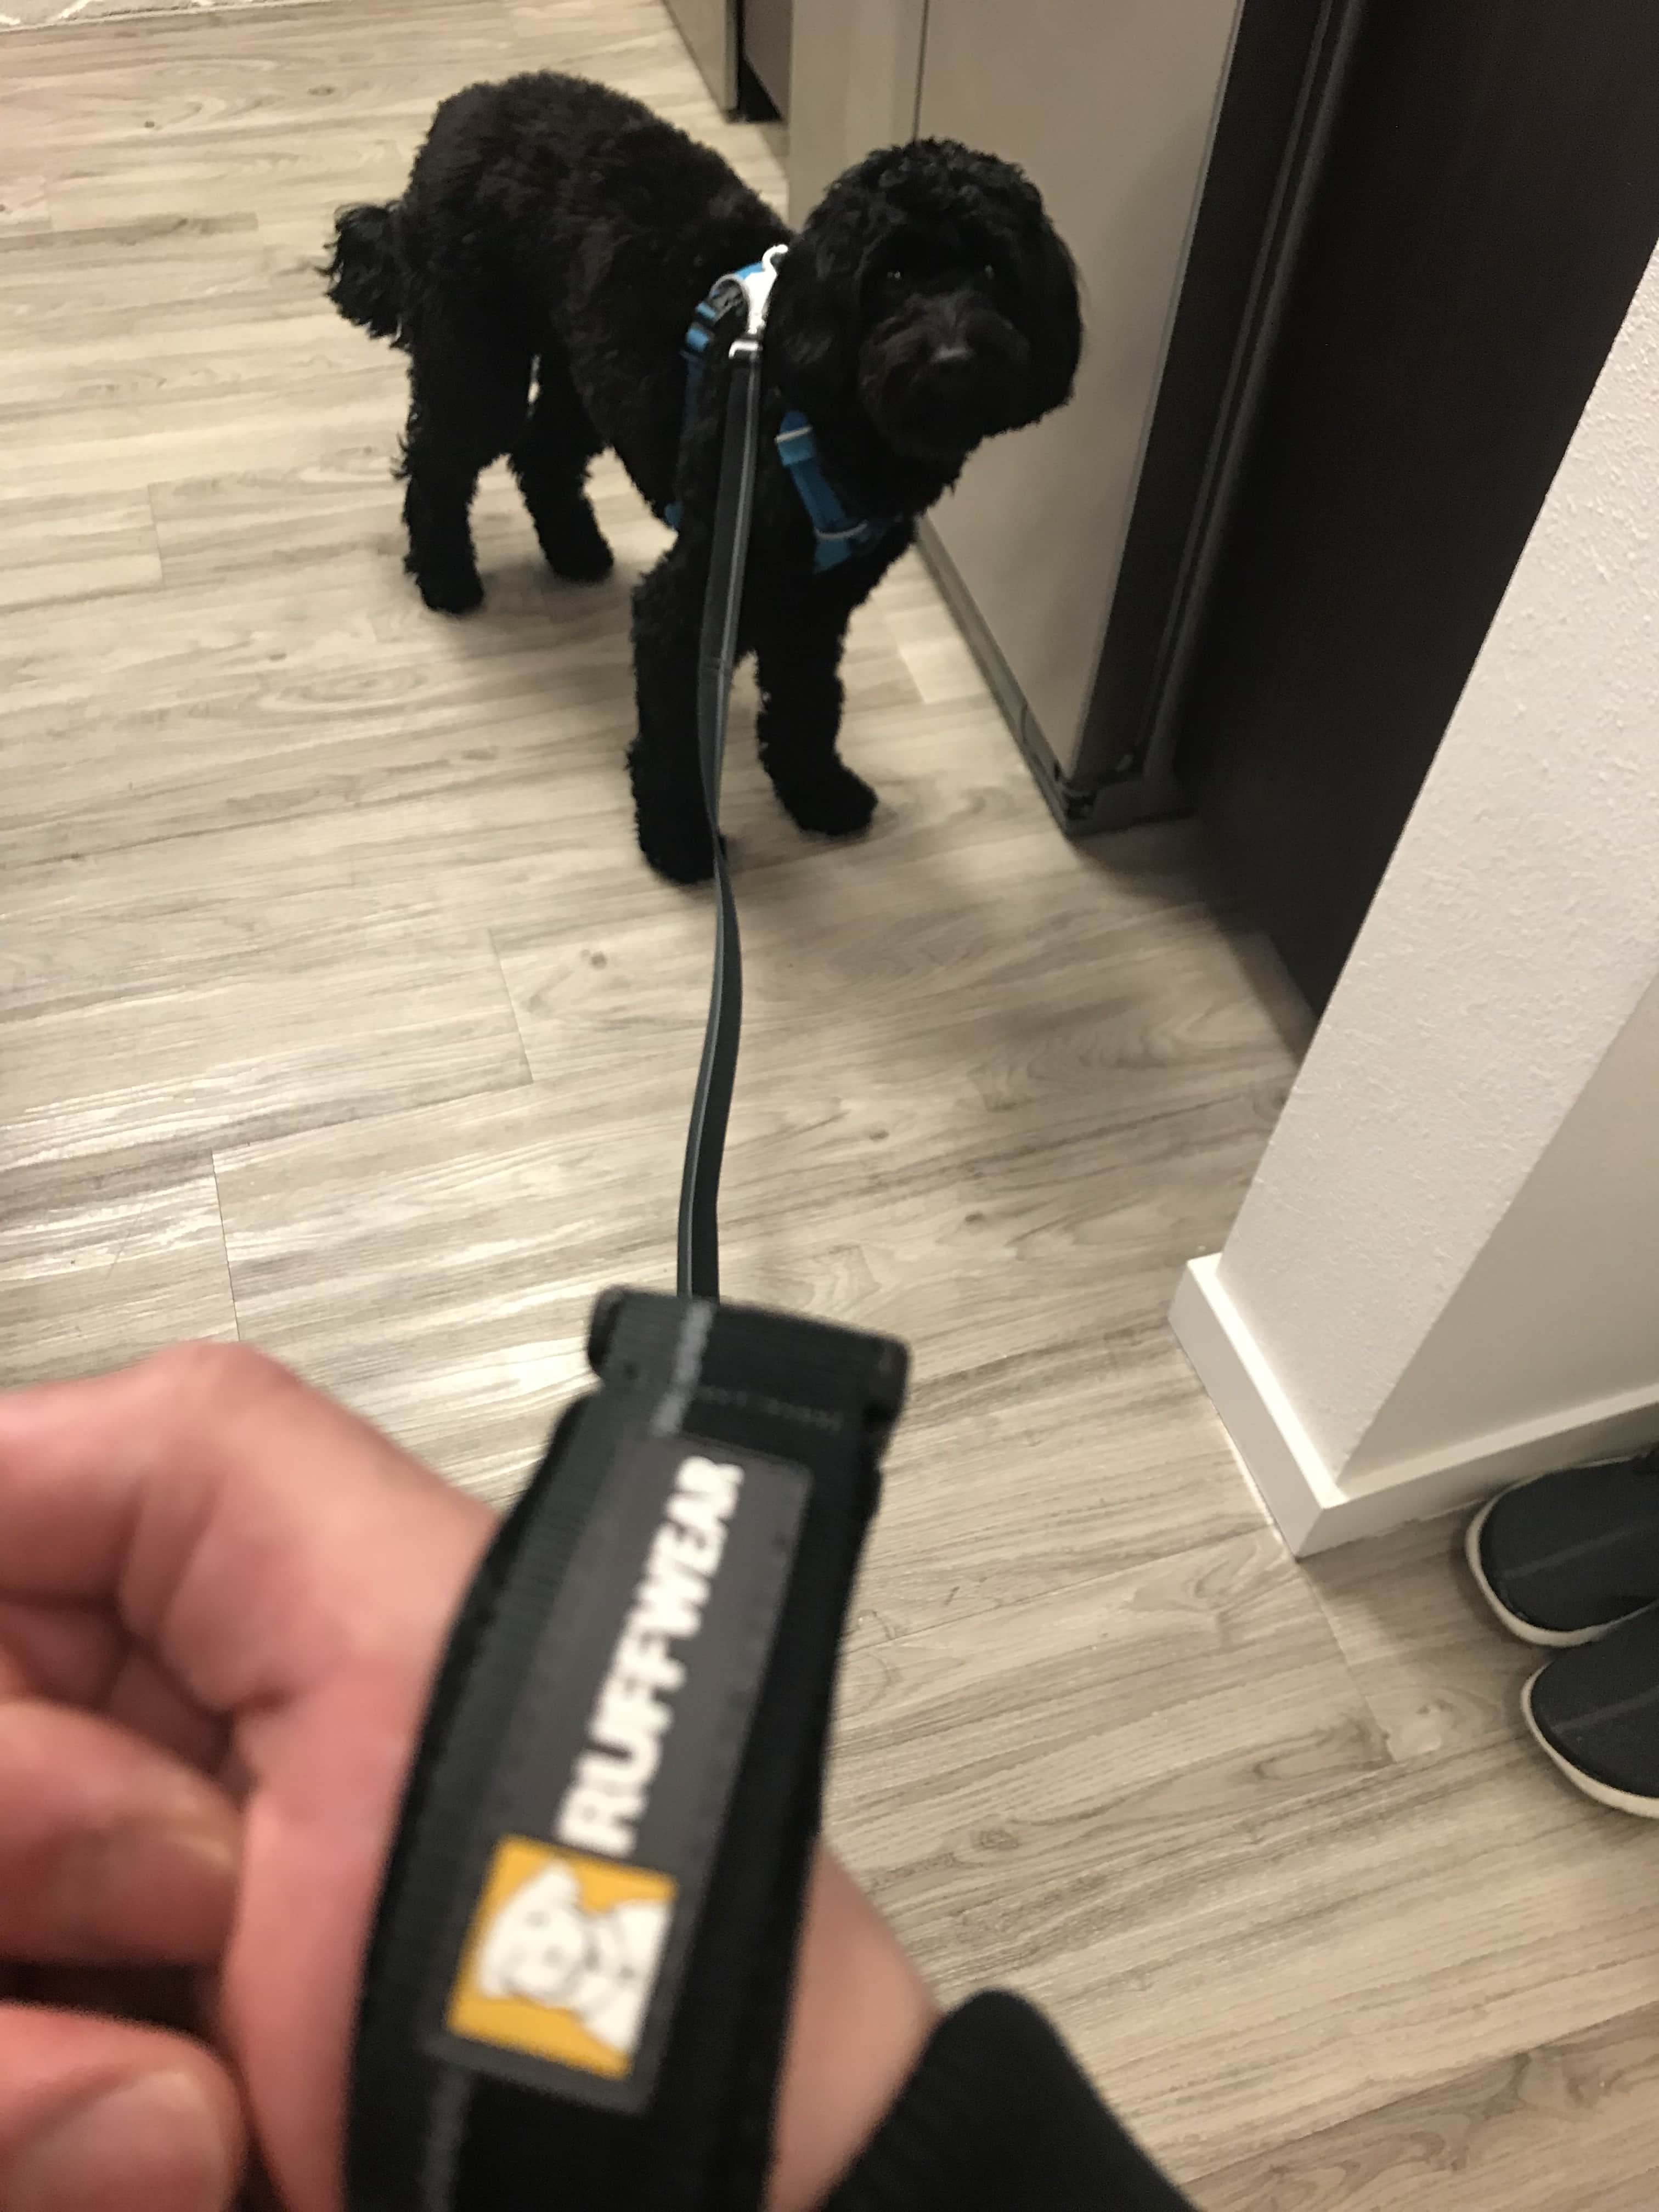 chew proof retractable dog leash